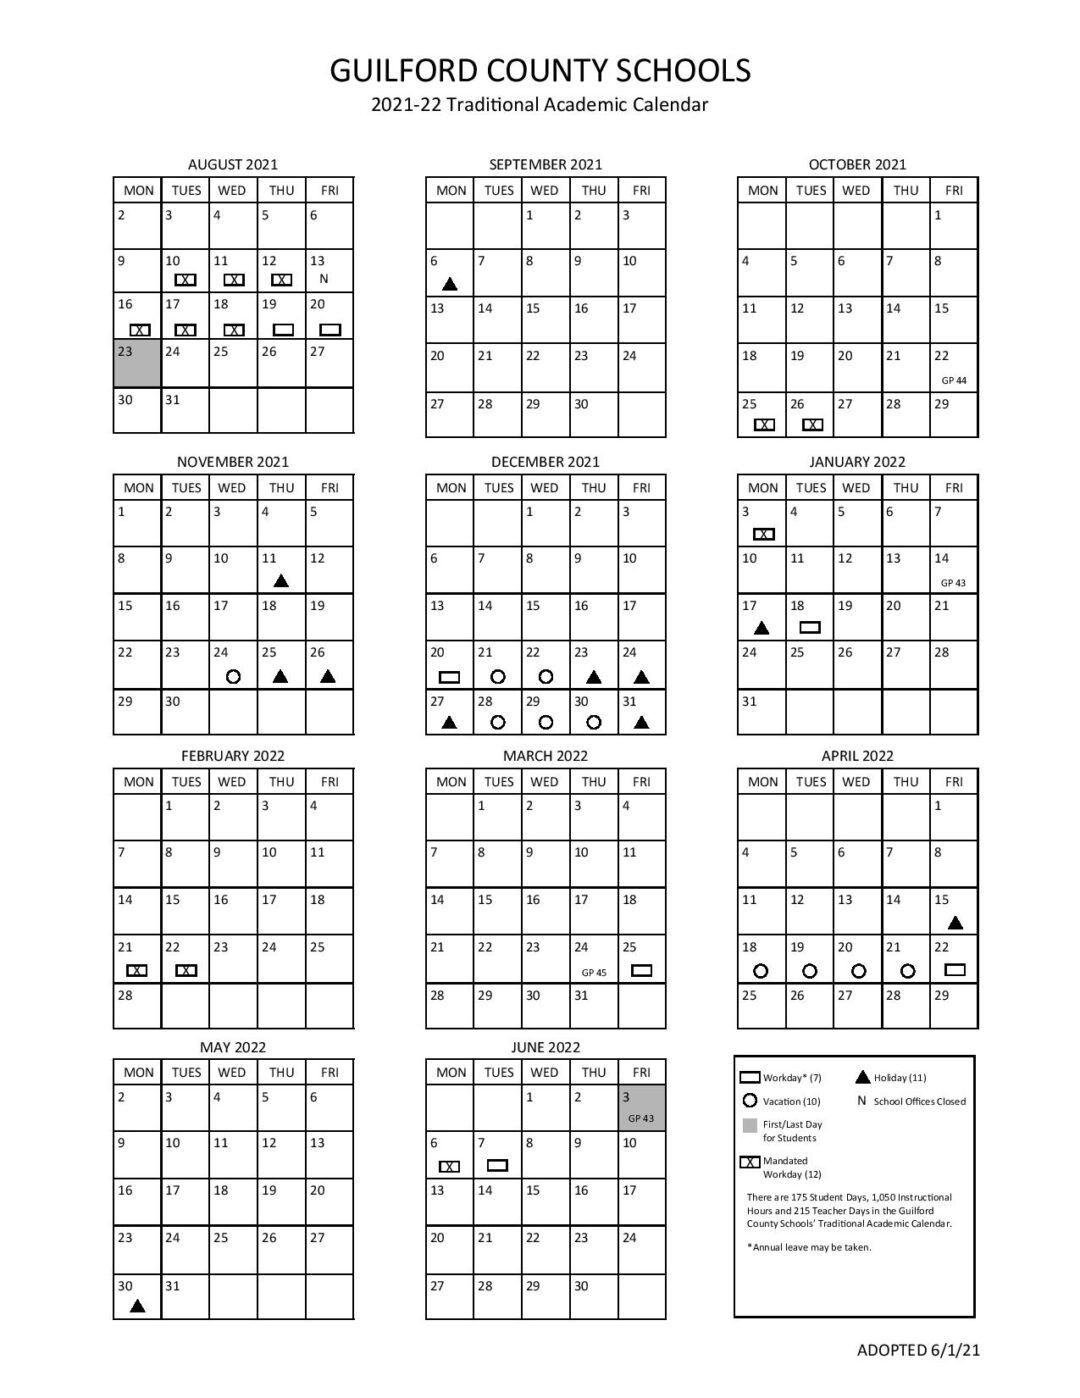 Guilford County School Calendar 2021-2022 In Pdf